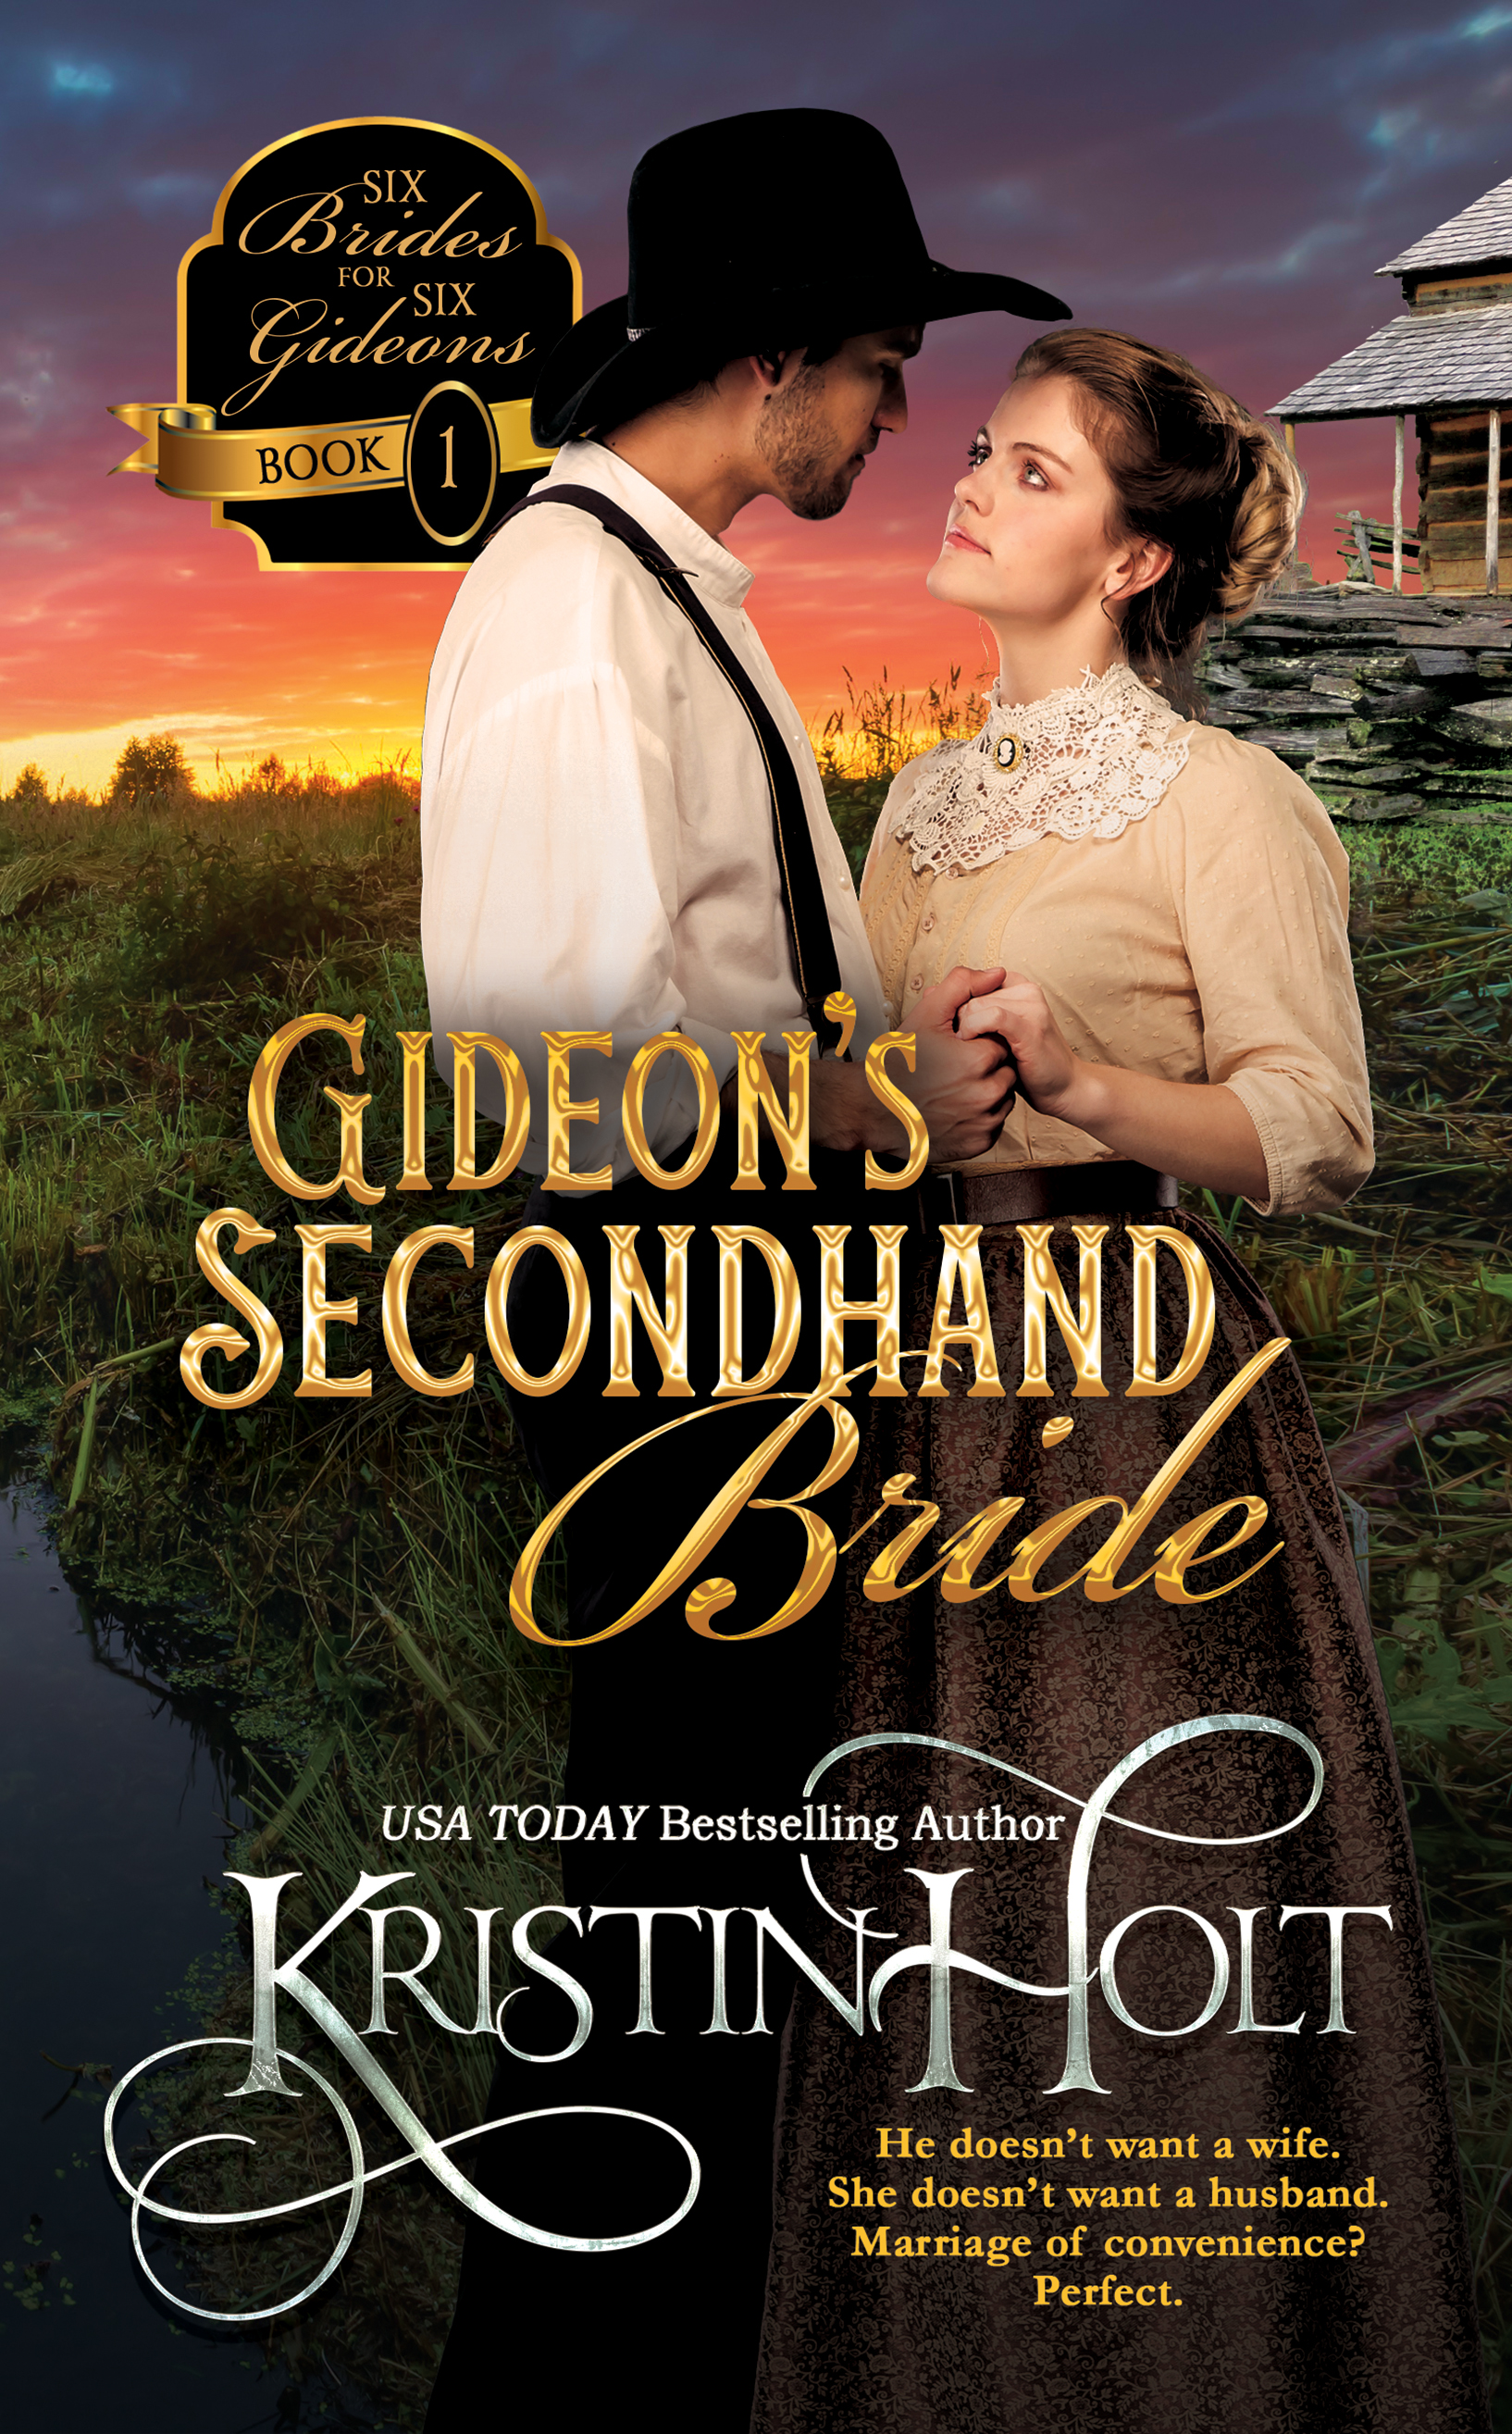 Kristin Holt | eBook Cover Art : Gideon's Secondhand Bride